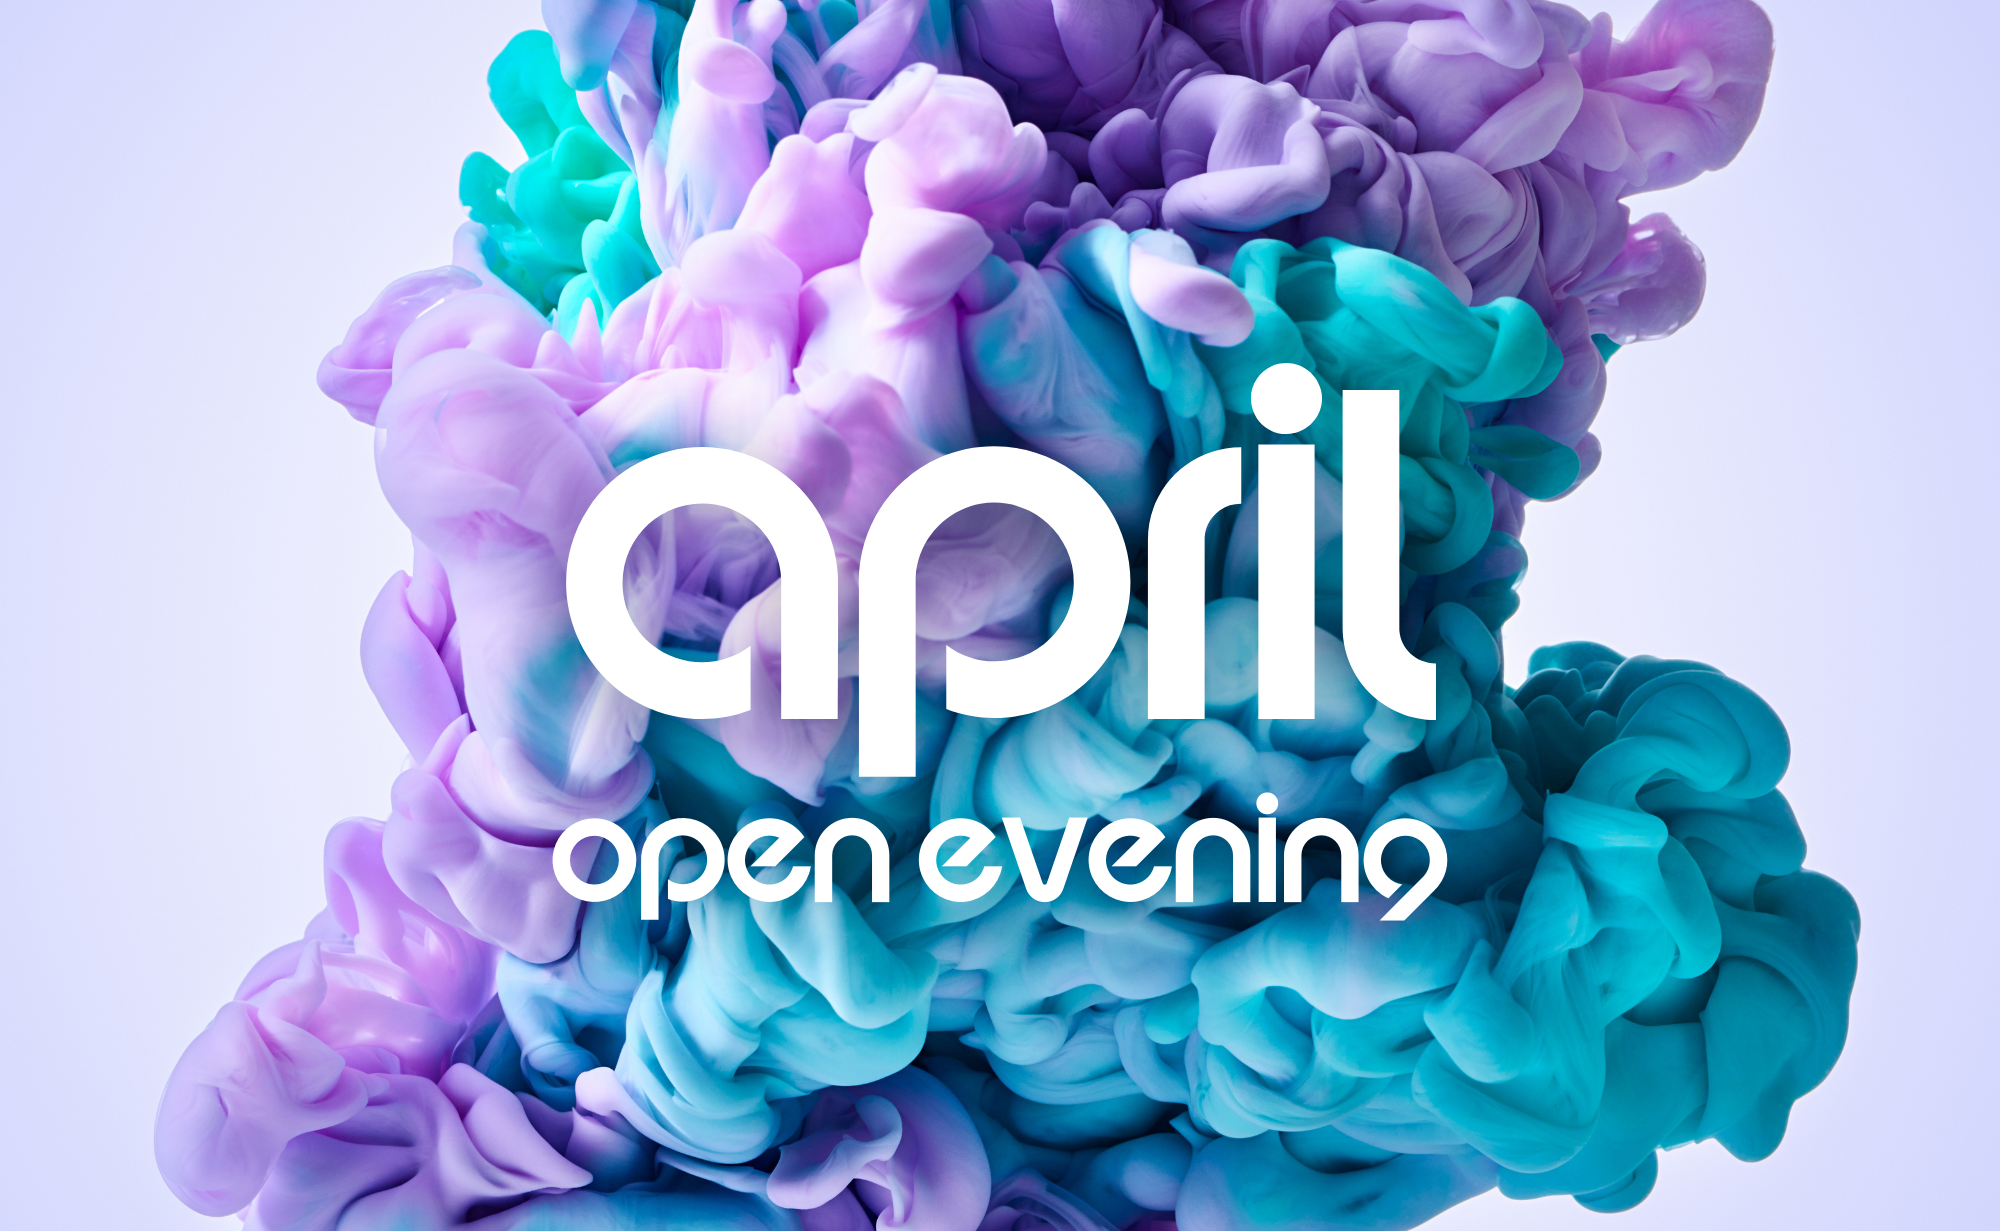 Open evening april